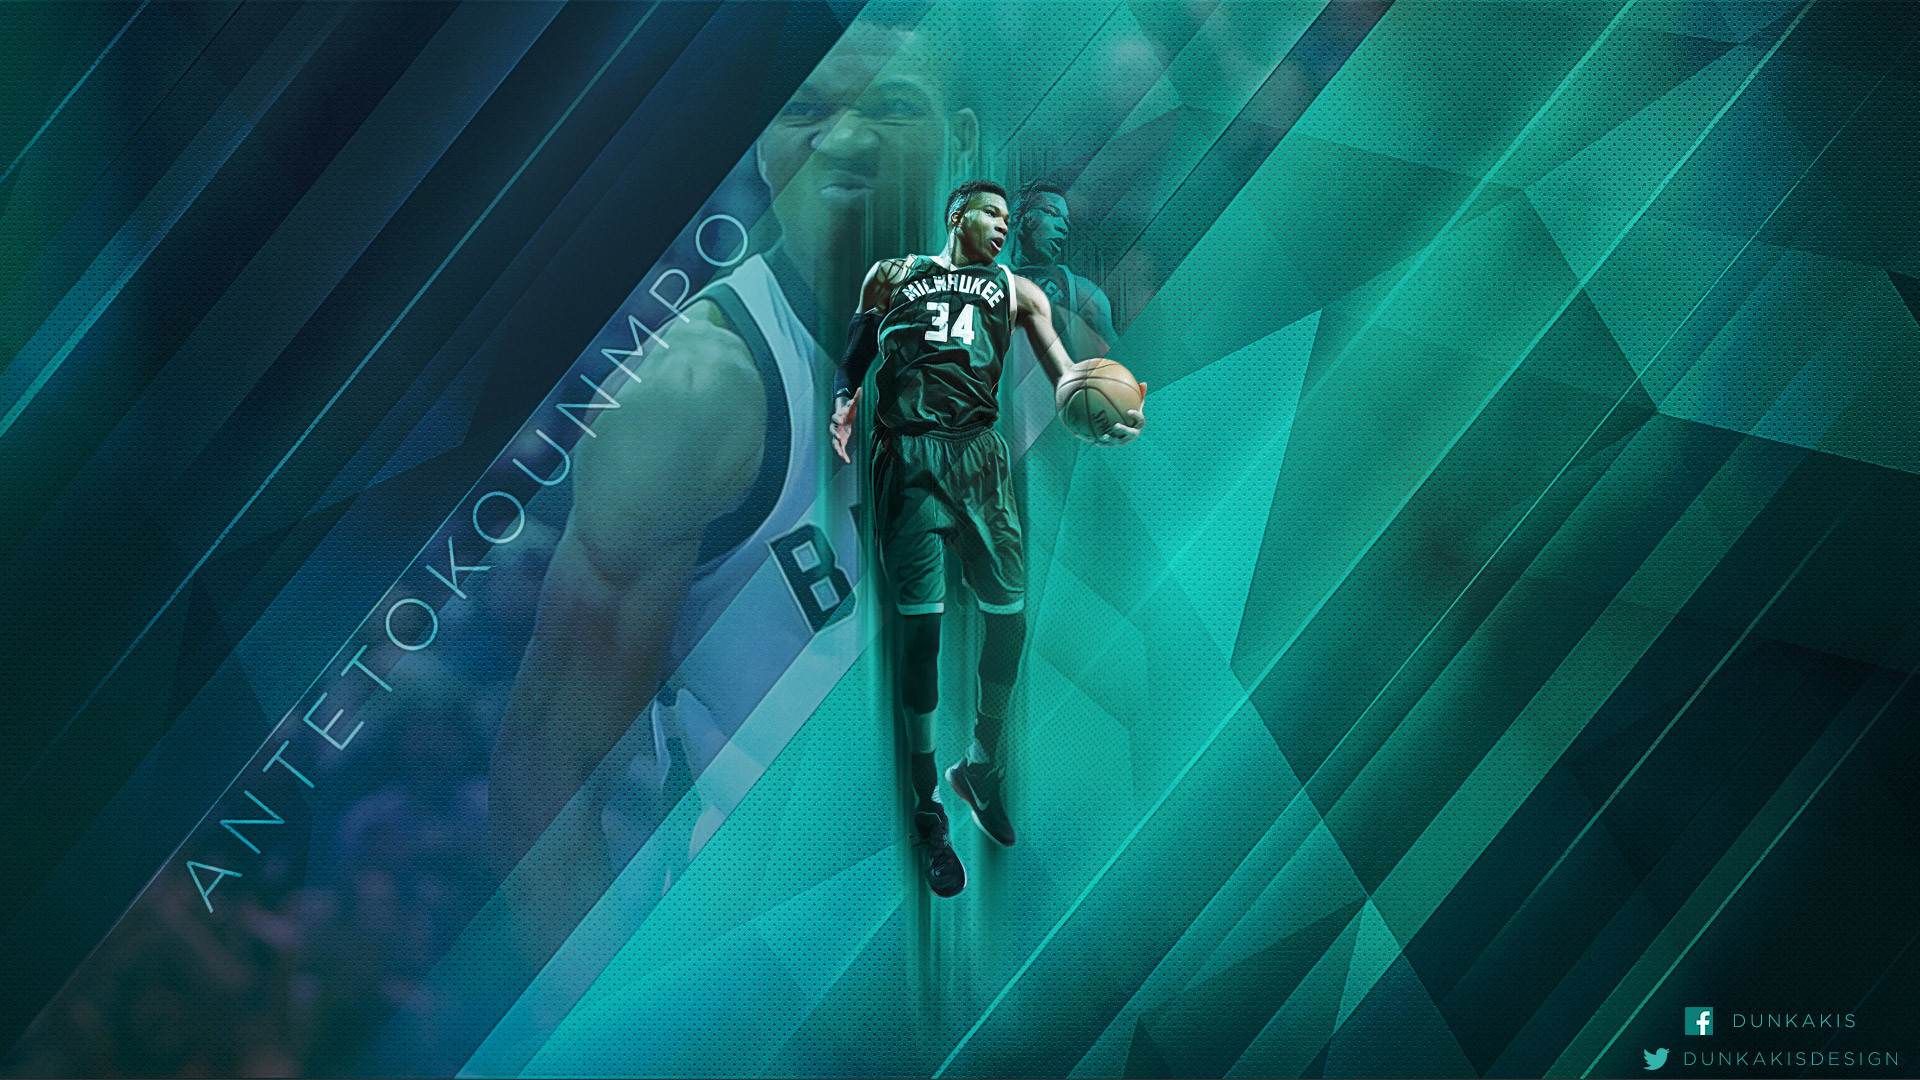 NBA Basketball Wallpaper 2018 (63+ images) Damian Lillard 2013 Wallpaper